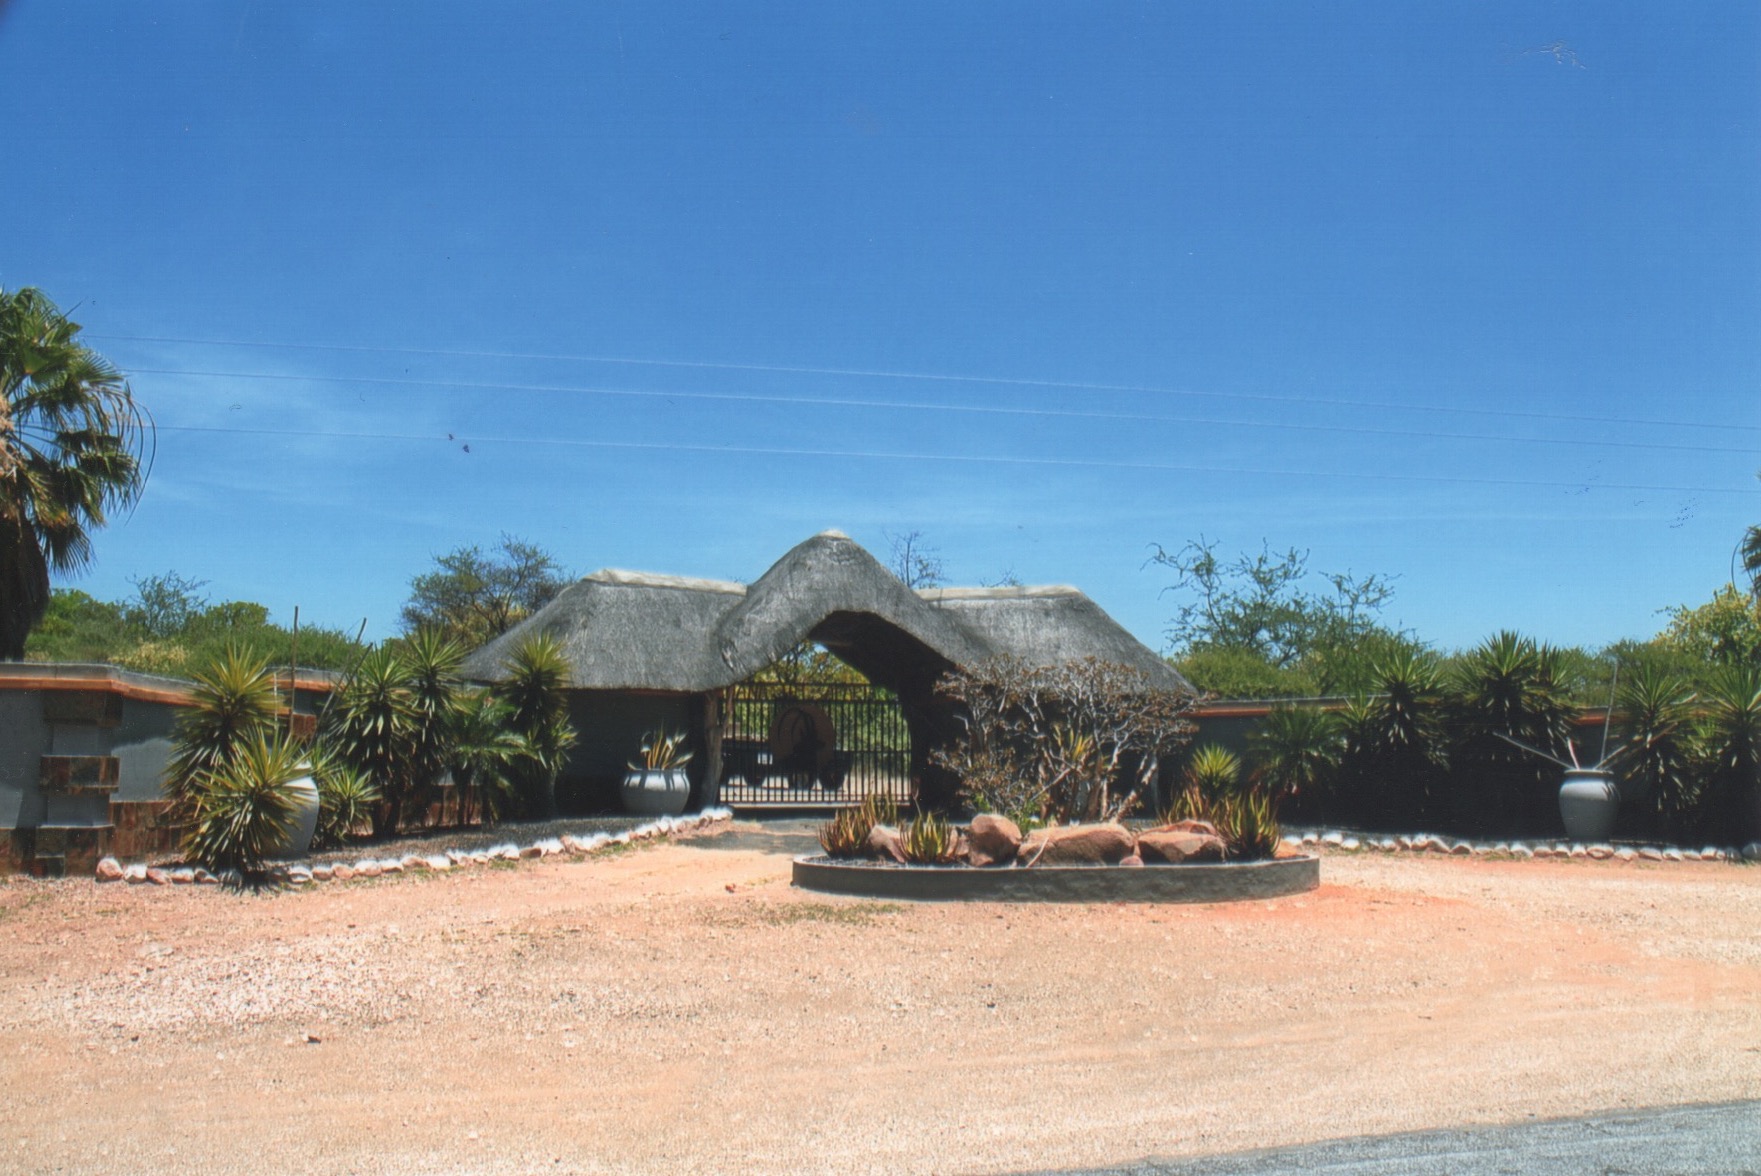 Main Entrance to Bwana Jim Safaris